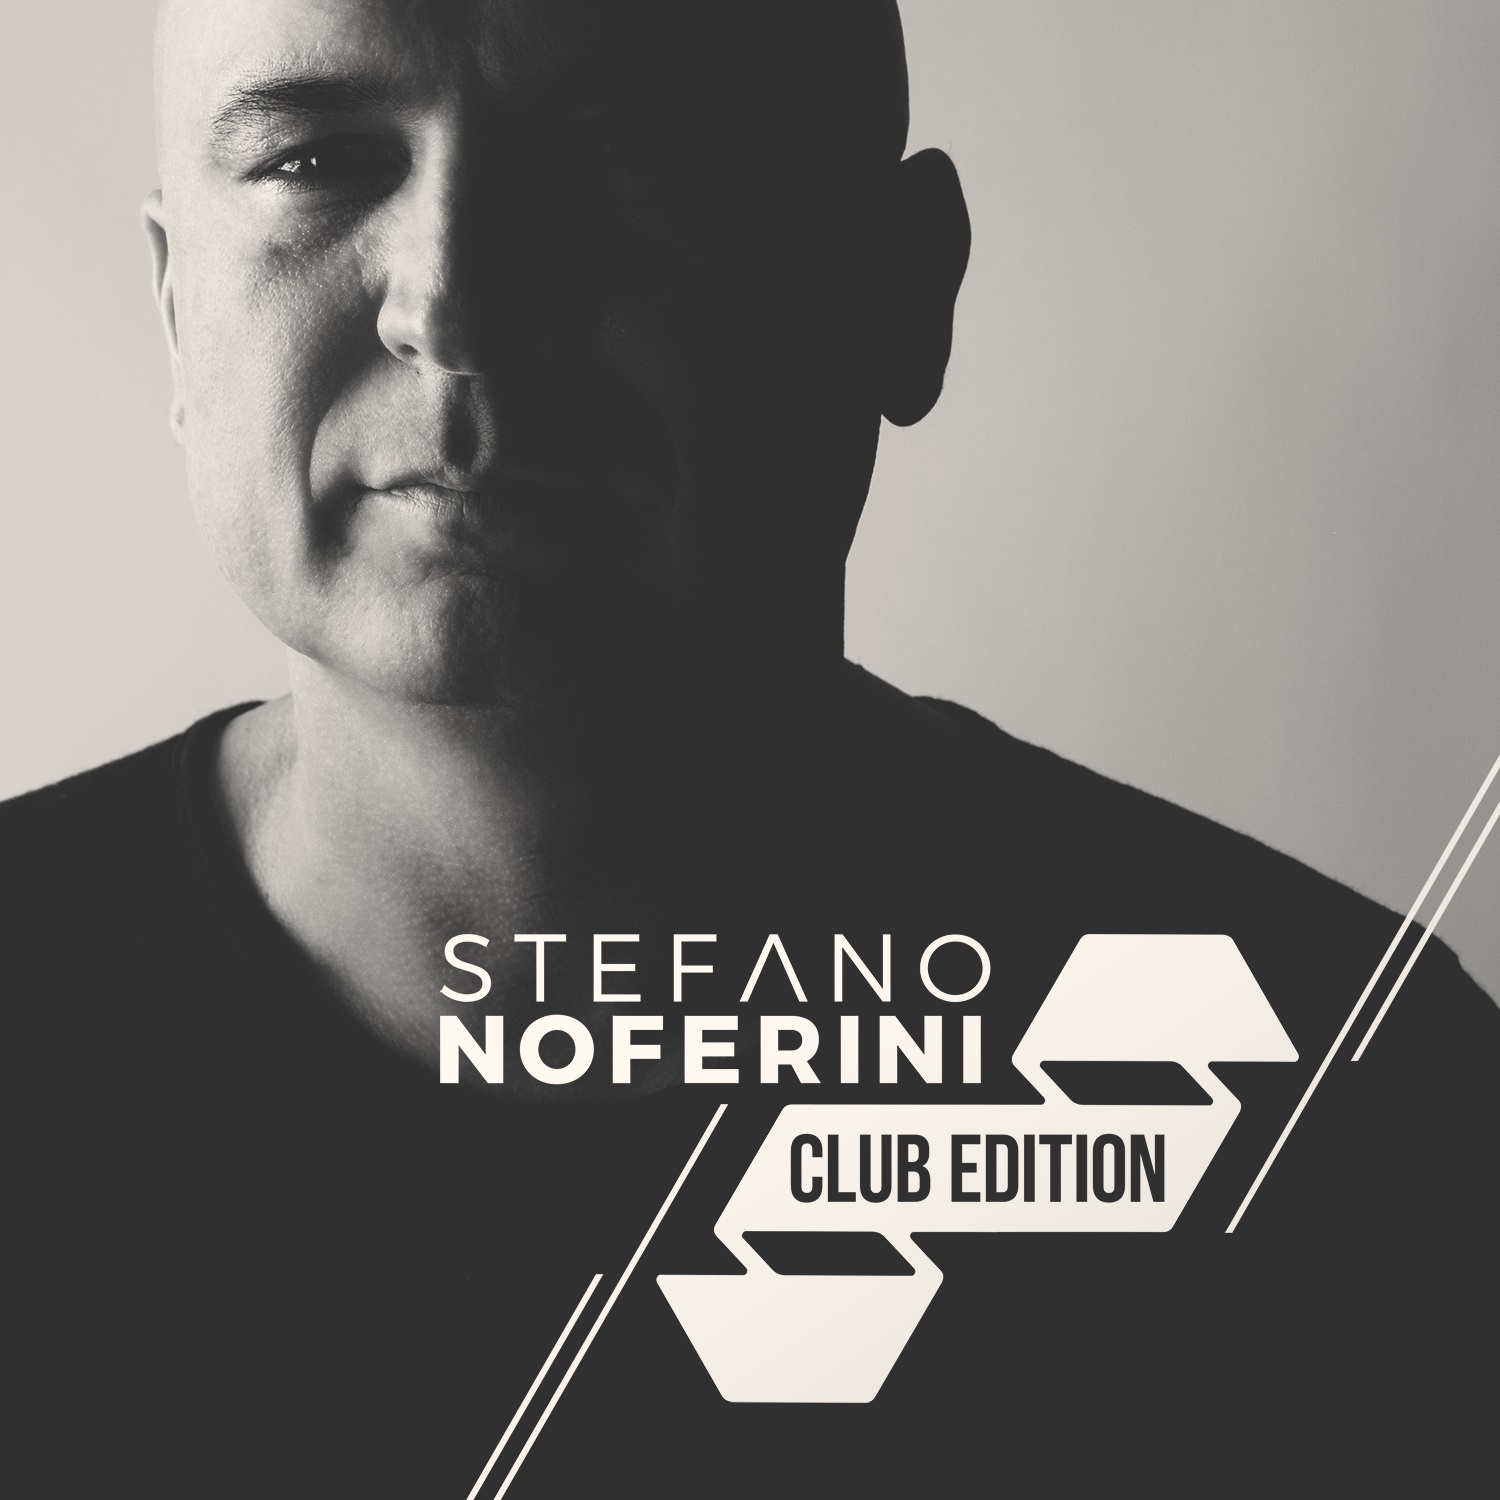 Delta Podcasts - Club Edition by Stefano Noferini (28.06.2018)